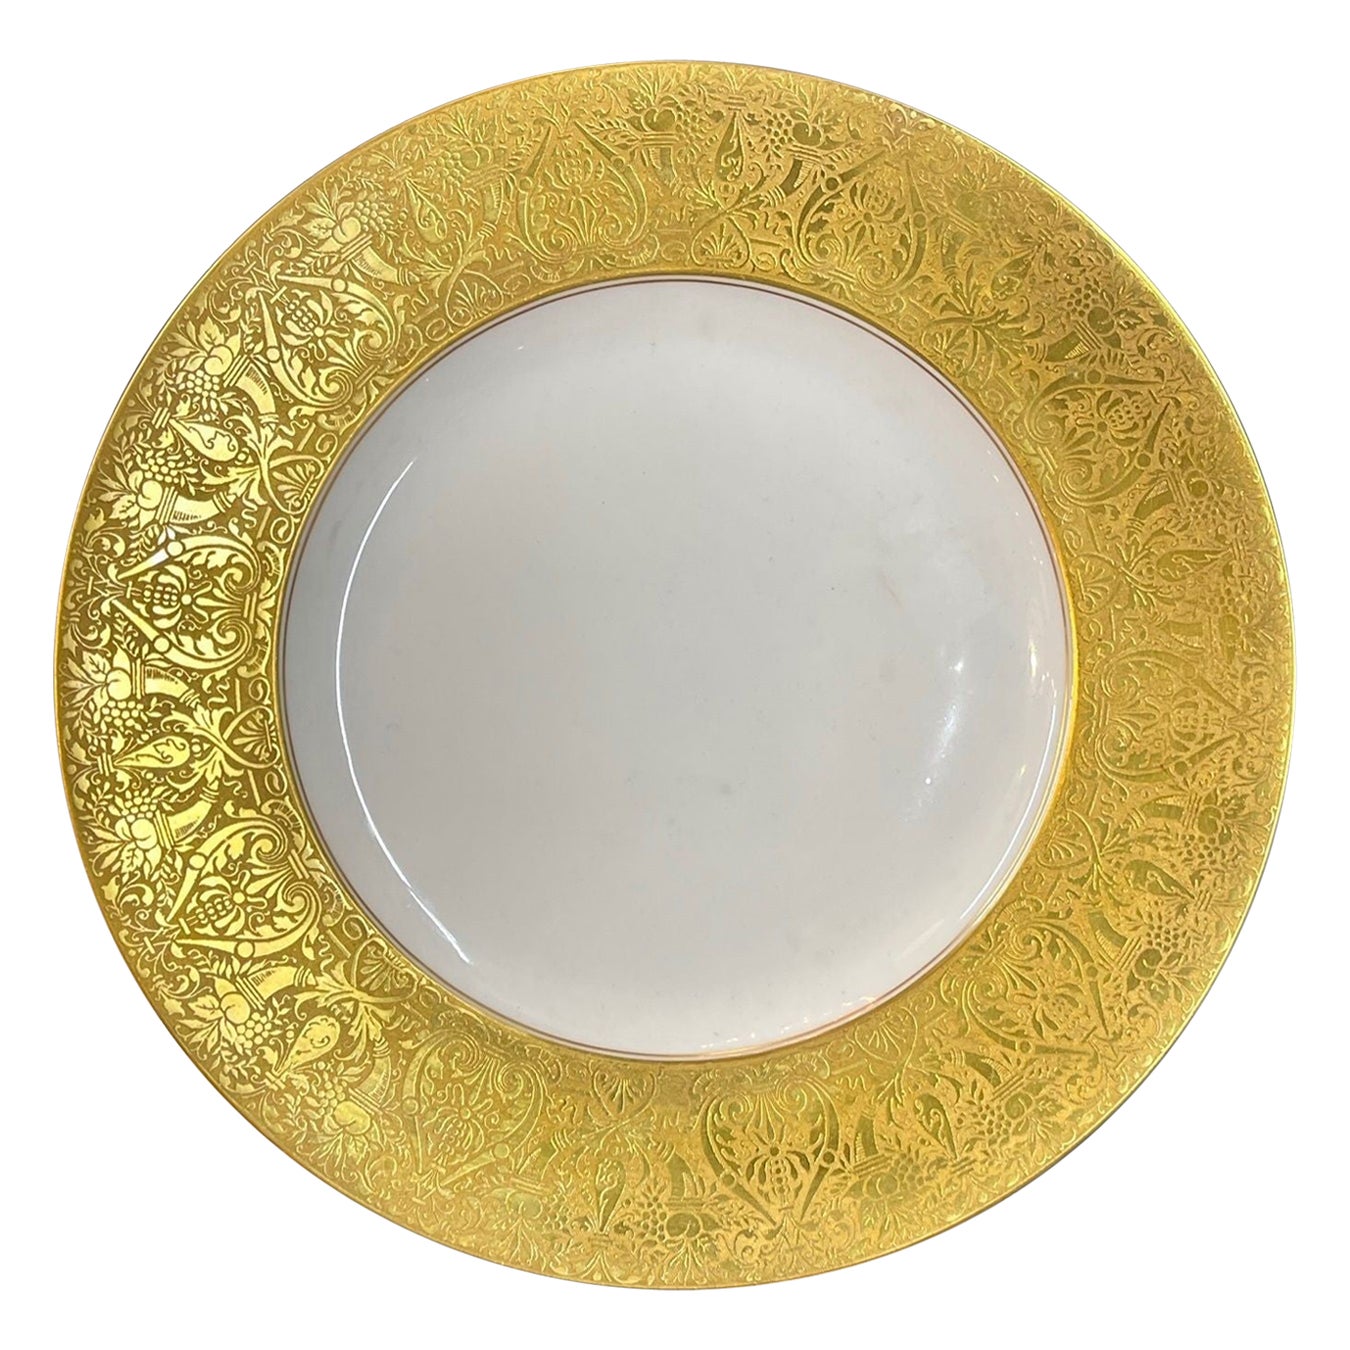 Set of 10 Royal Bavarian Gold Encrusted Service Plates For Sale